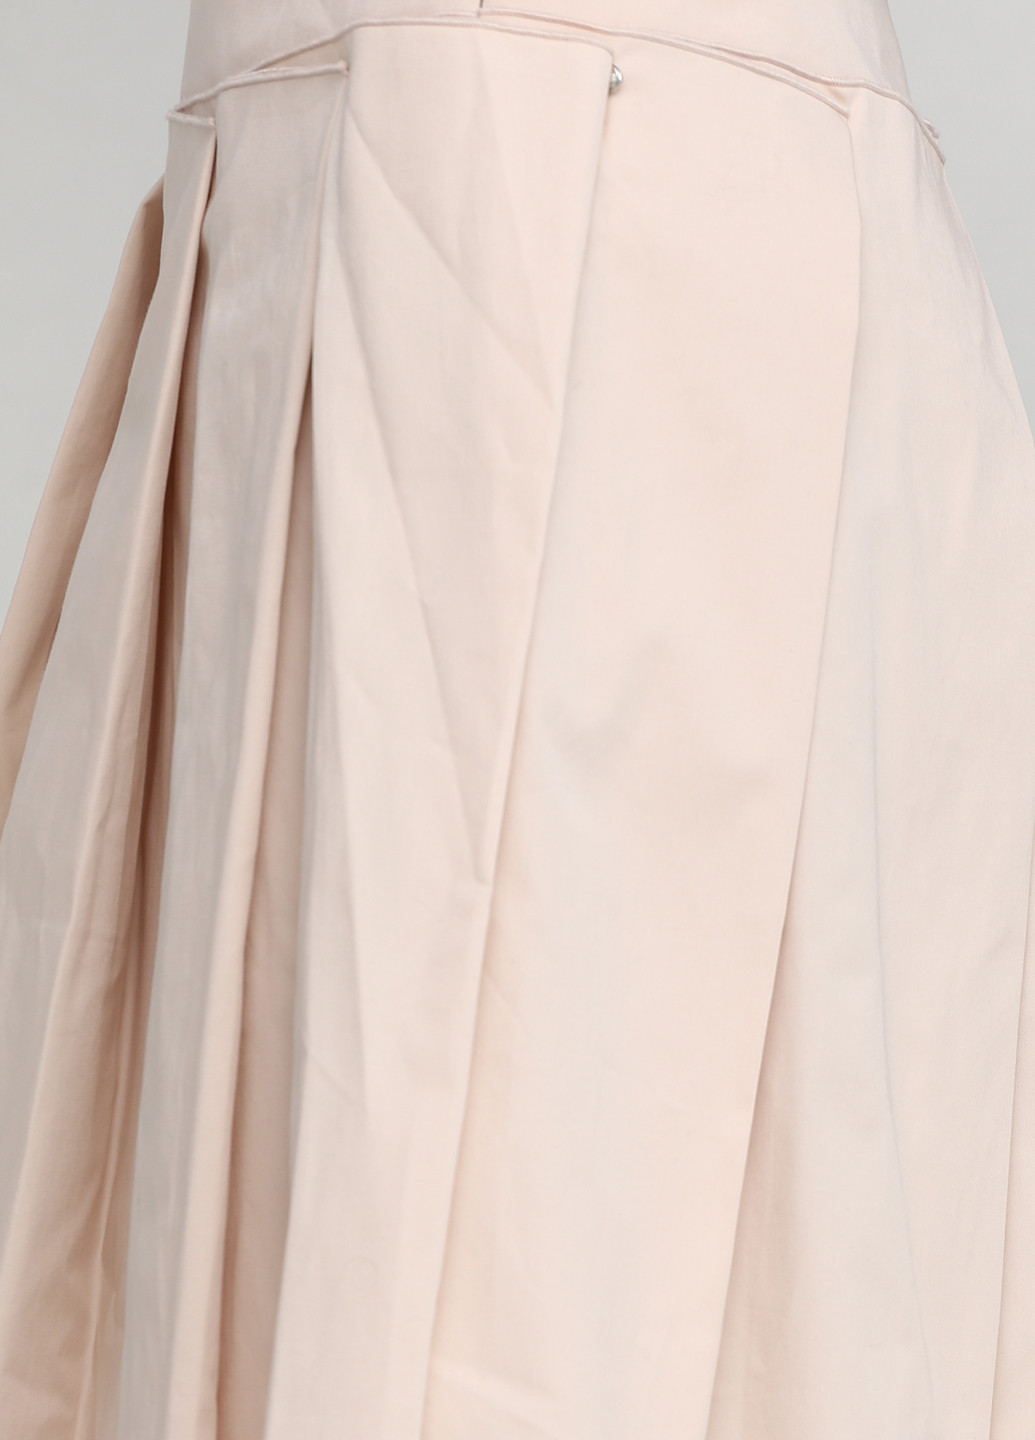 Бледно-розовая кэжуал однотонная юбка Cacharel а-силуэта (трапеция)